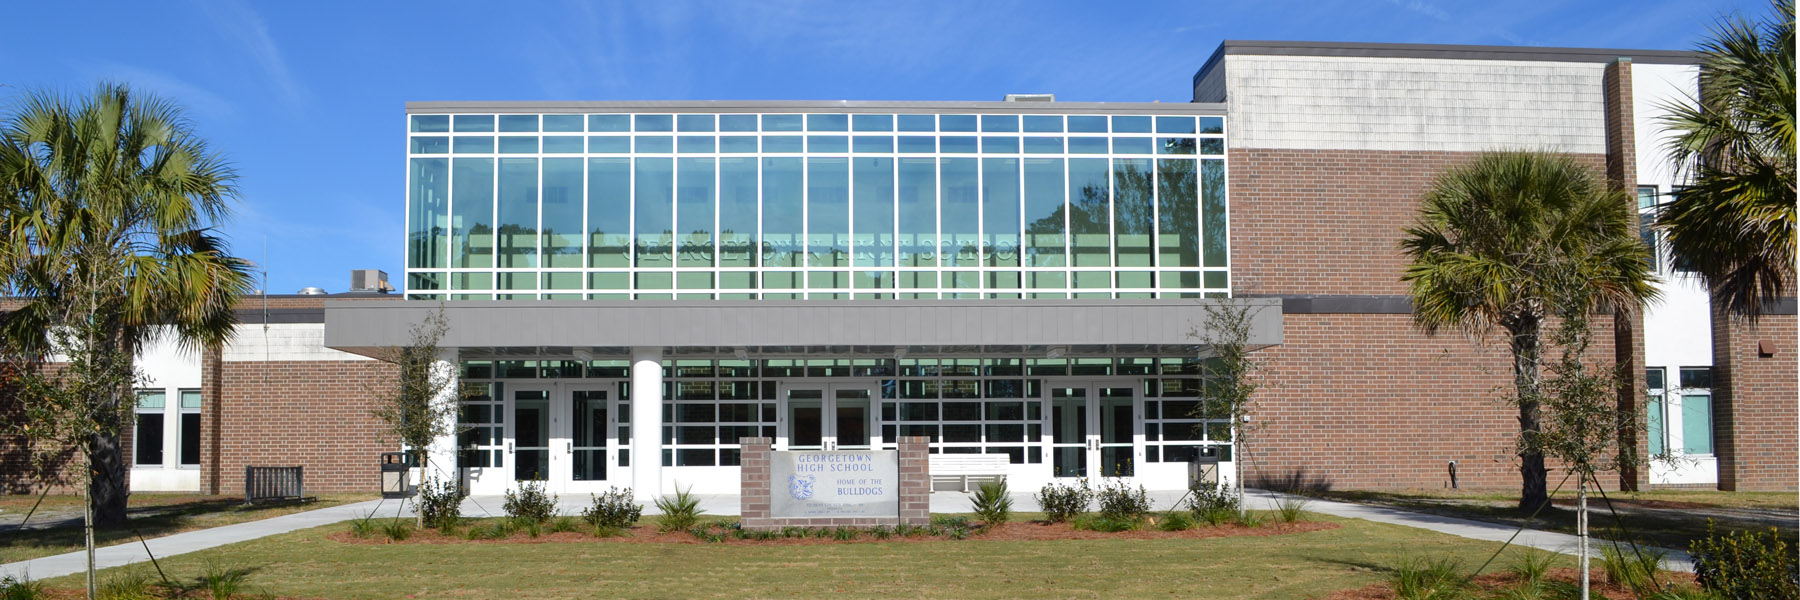 School building exterior and entrance